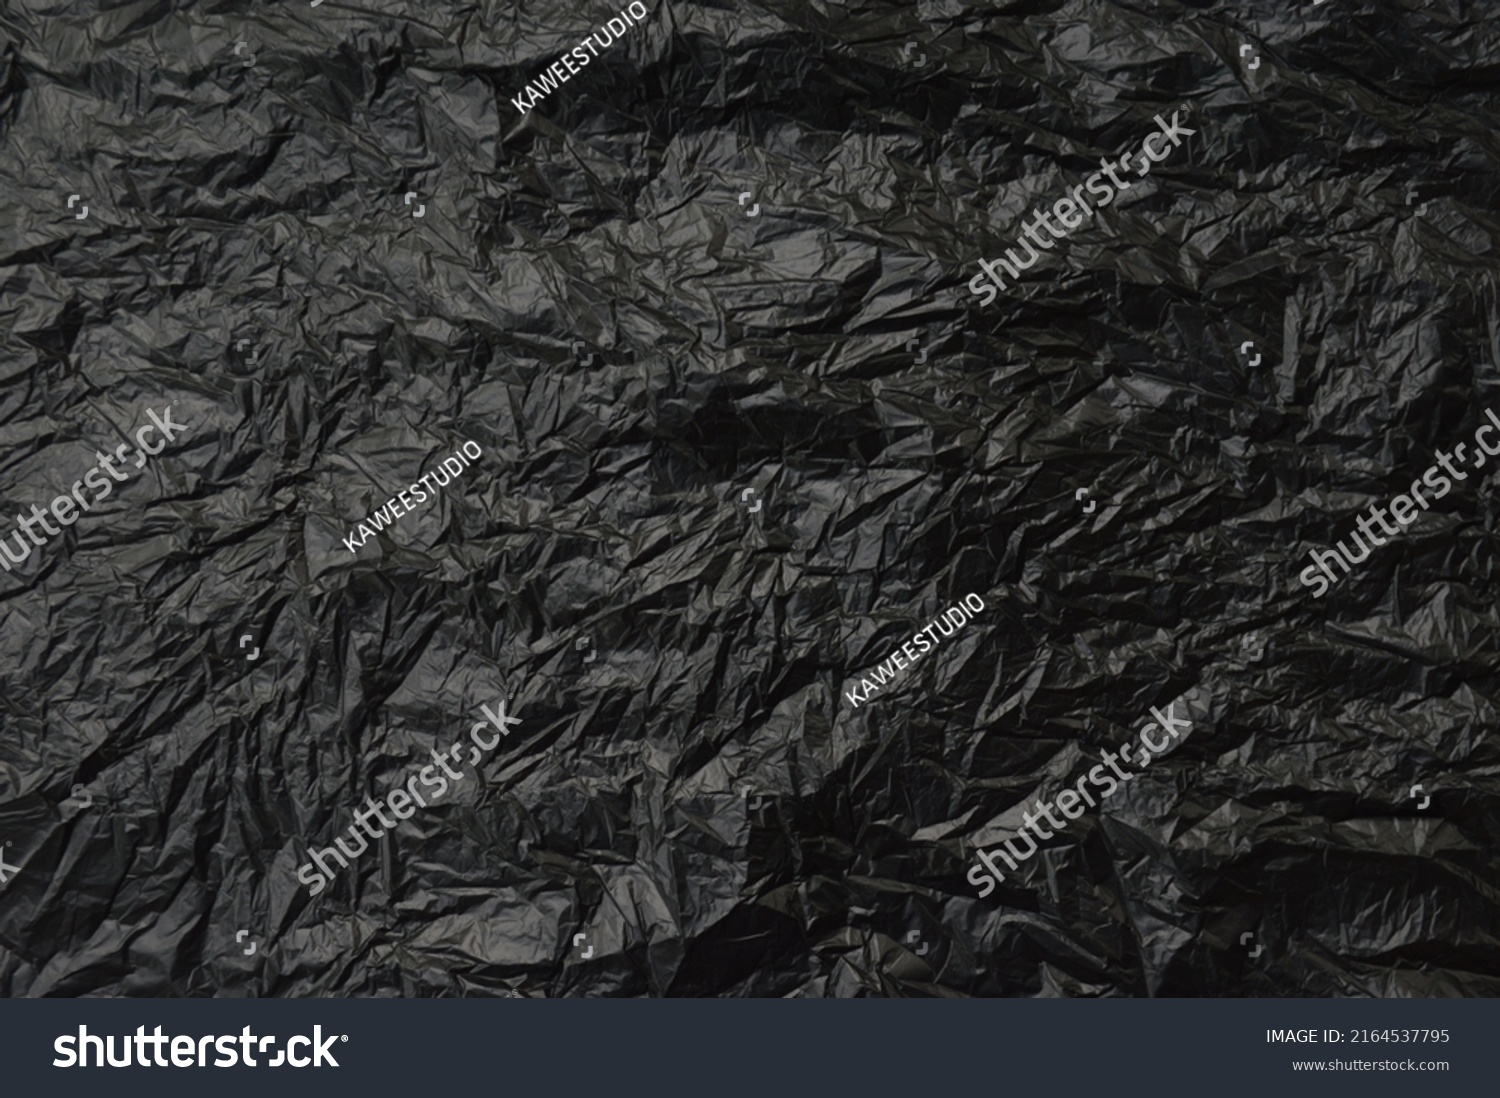 Trash Bag Texture Background Black Crumpled Stock Photo 2164537795 ...